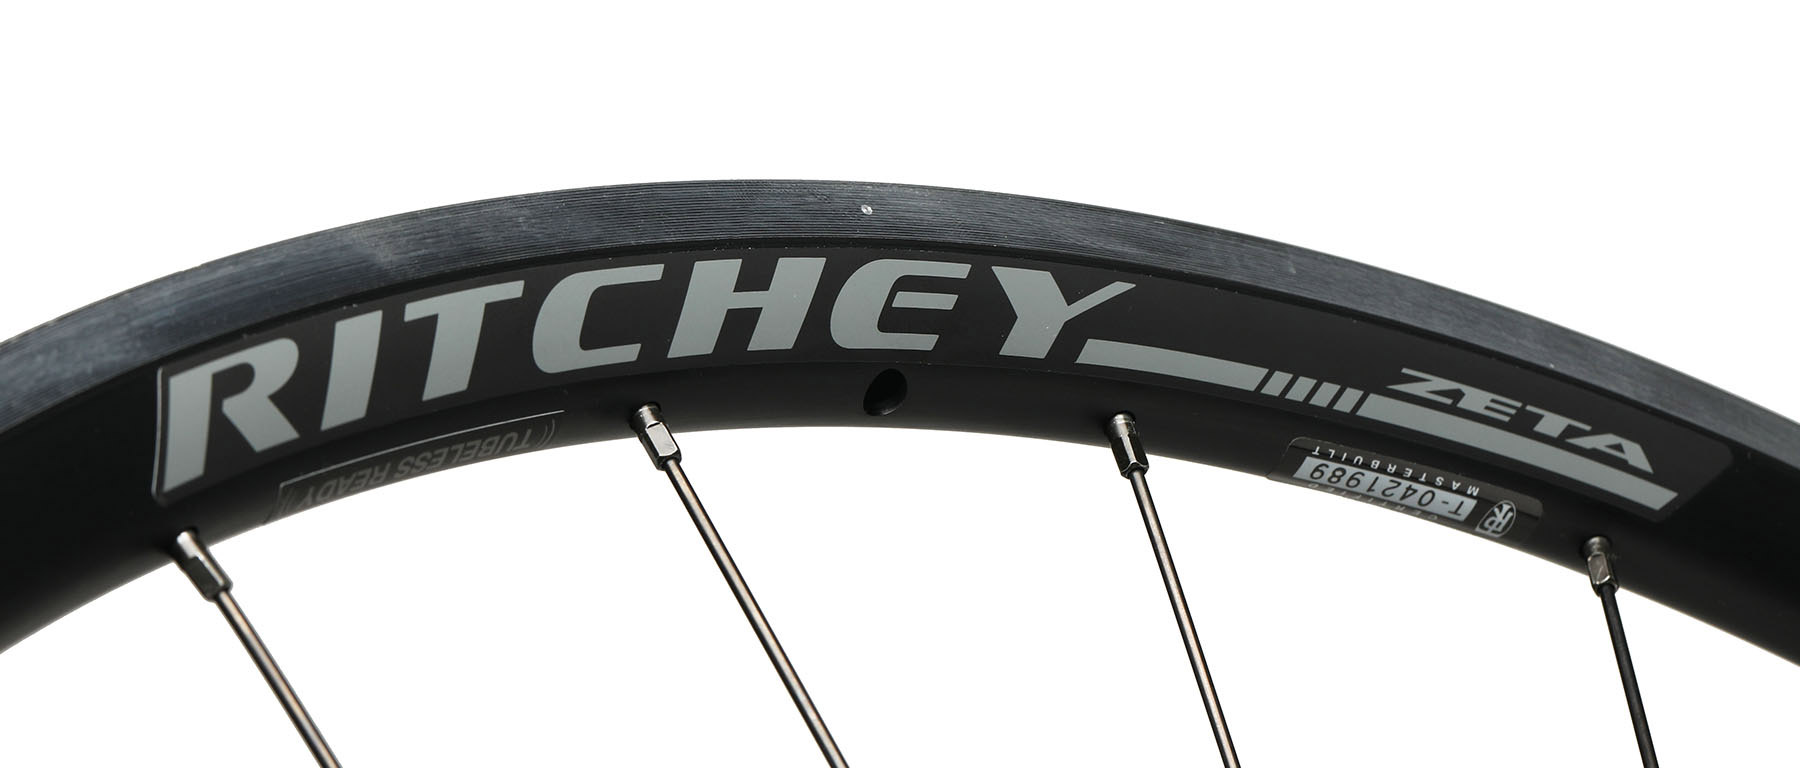 Ritchey Comp Zeta Wheelset